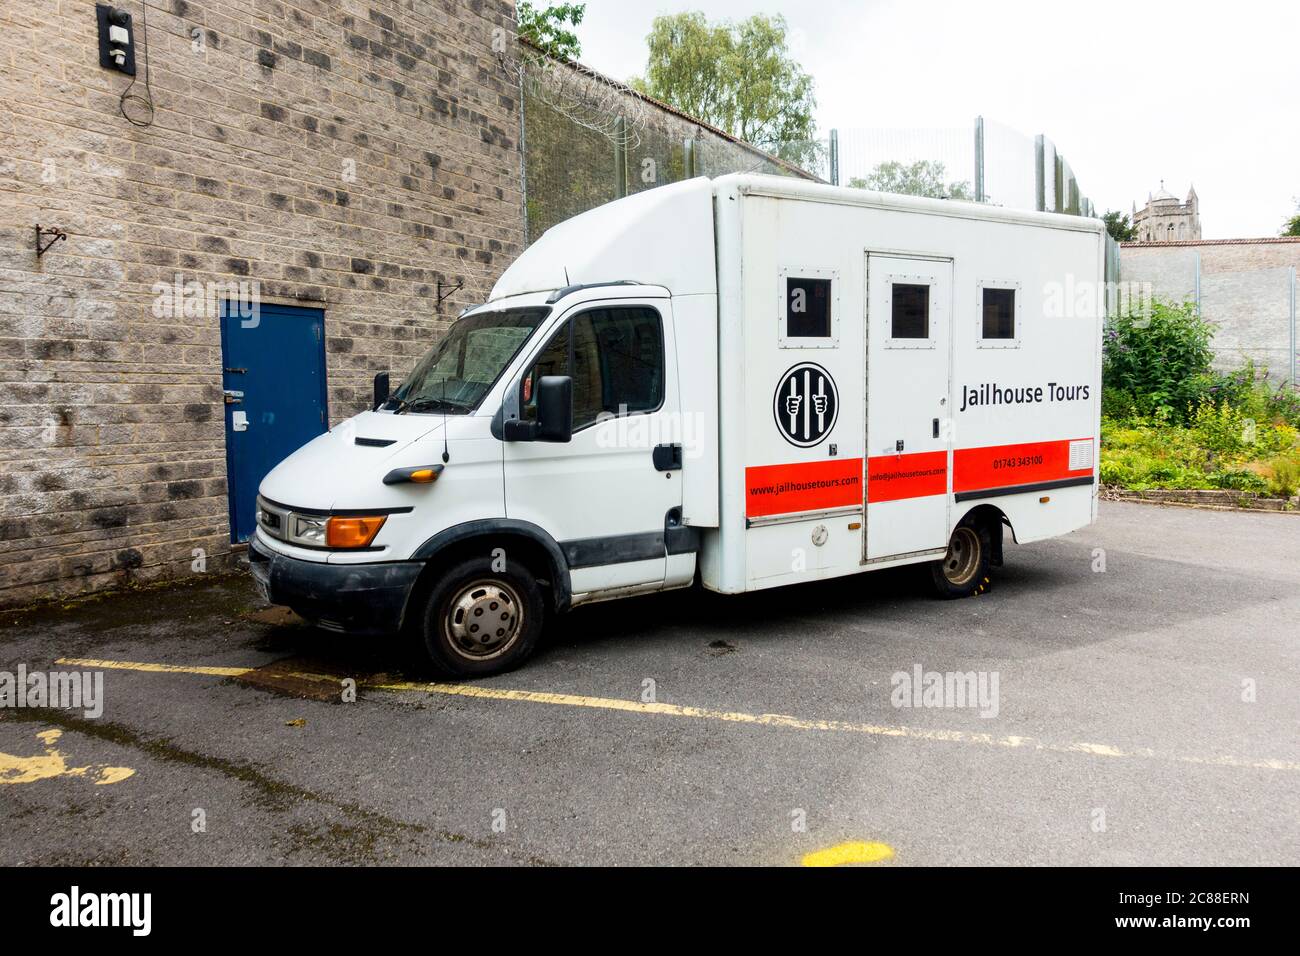 Shepton Mallet Prison Tours Van, Shepton Mallet, Somerset, England, UK. Stock Photo